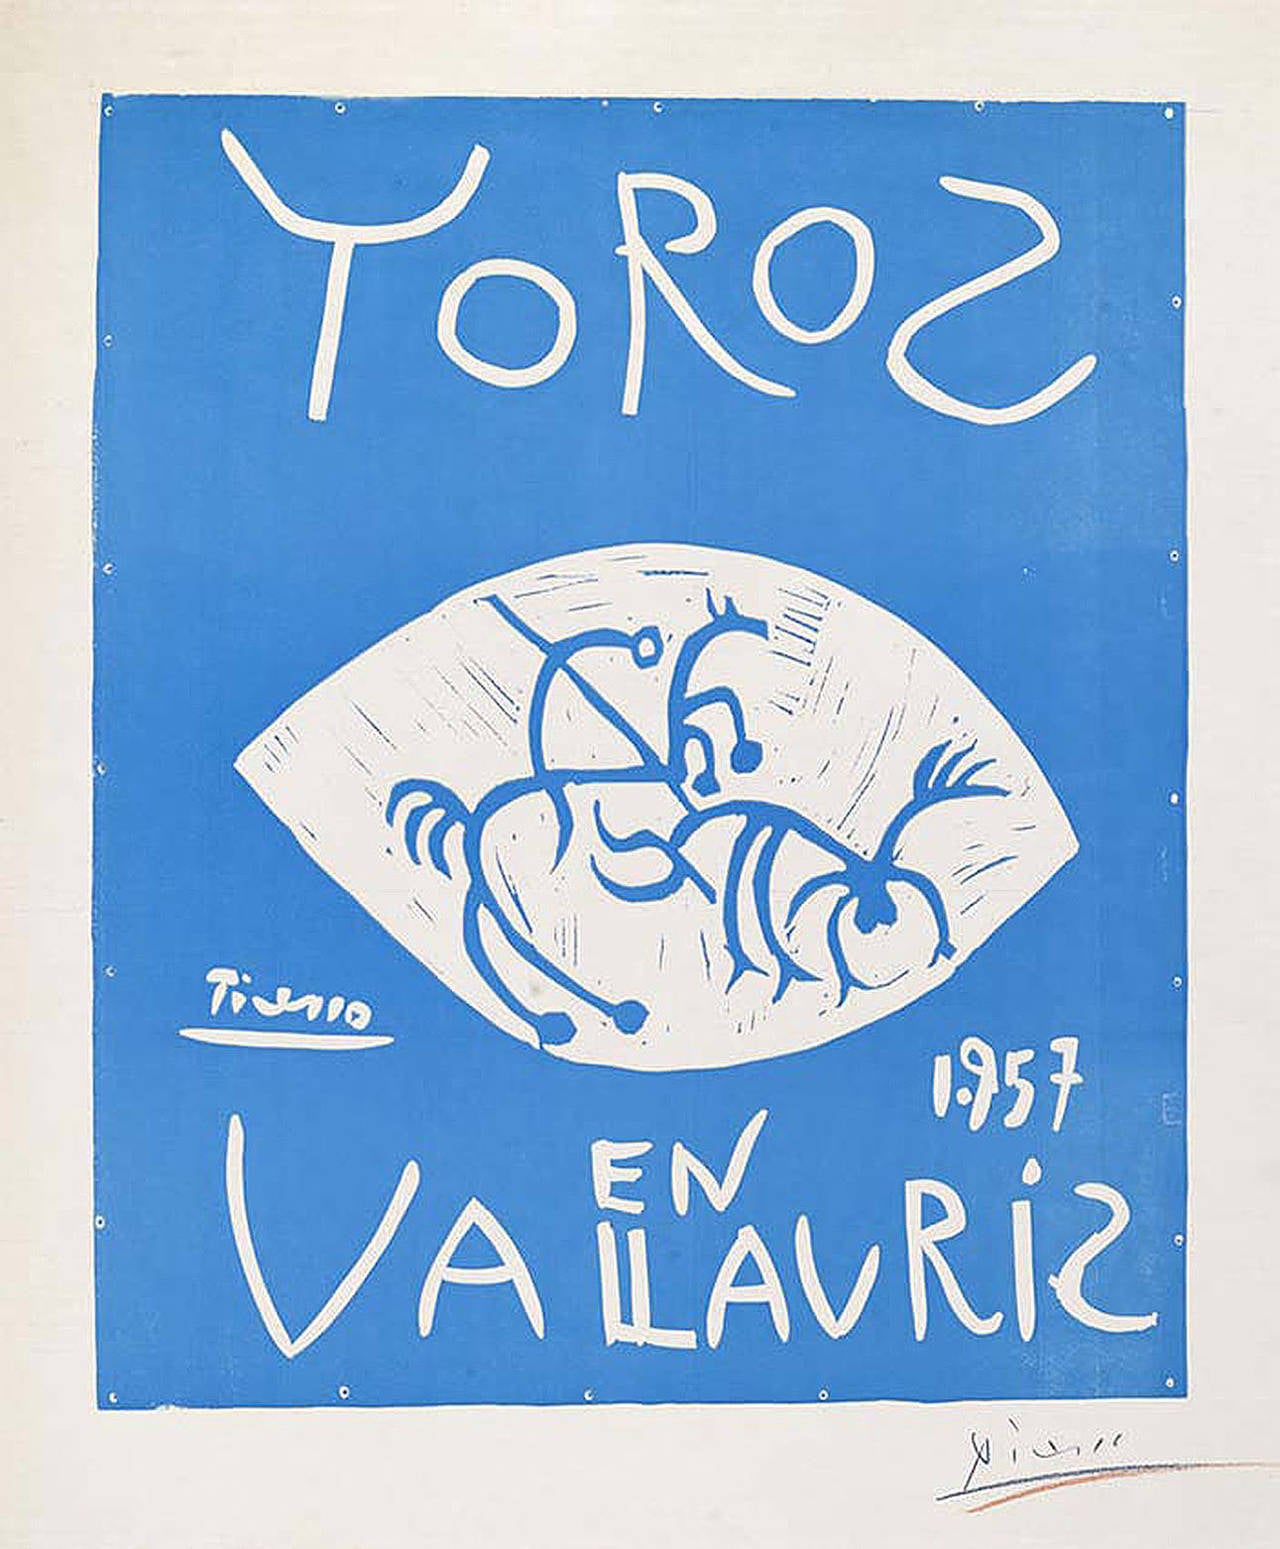 Toros en Vallauris (Bulls in Vallauris) - Print by Pablo Picasso